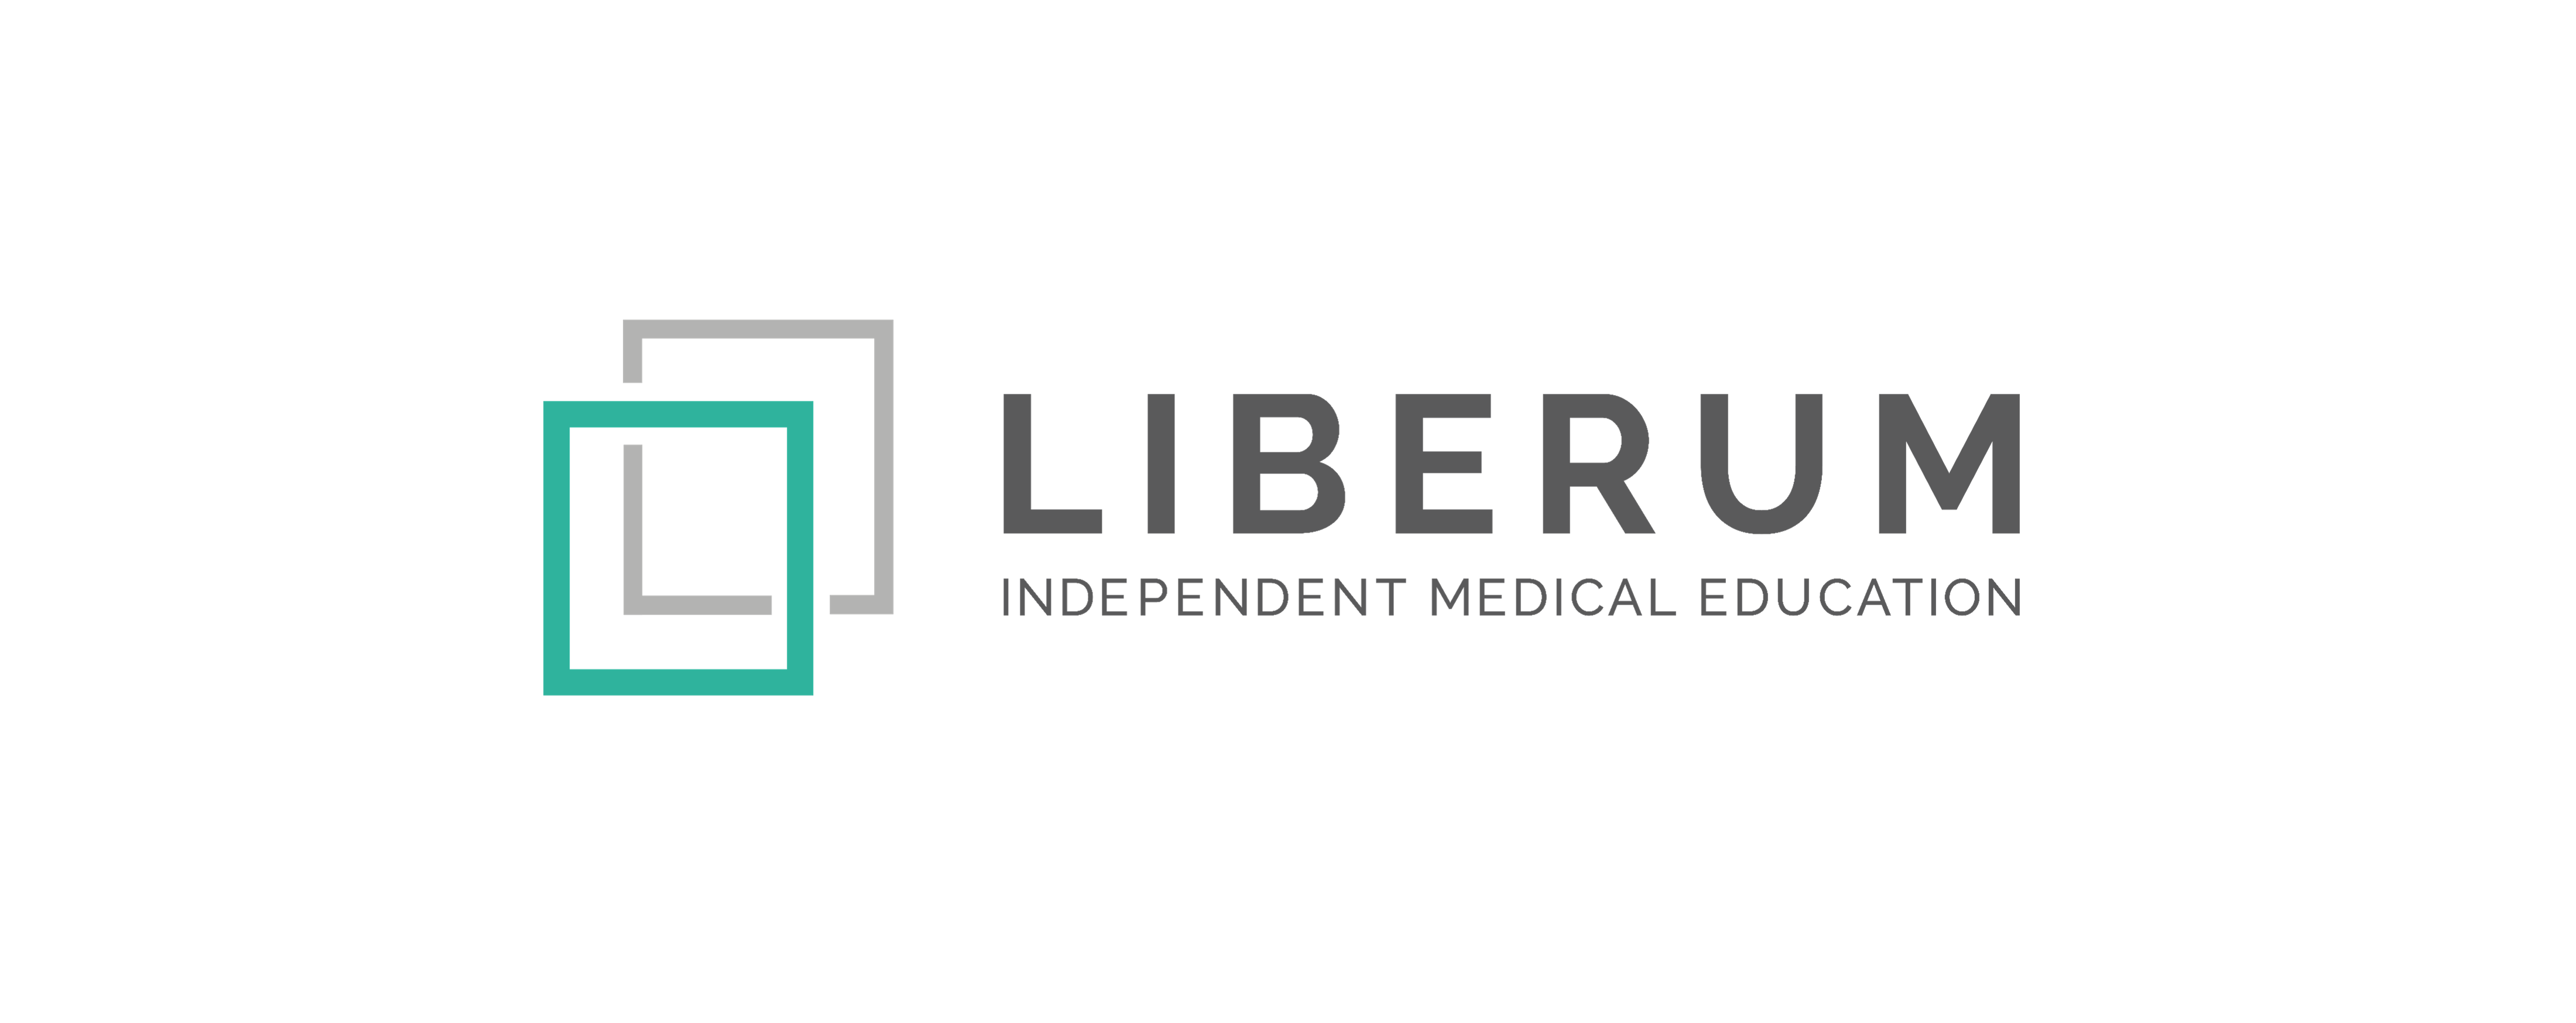 Liberum Independent Medical Education Announces Management Buyout